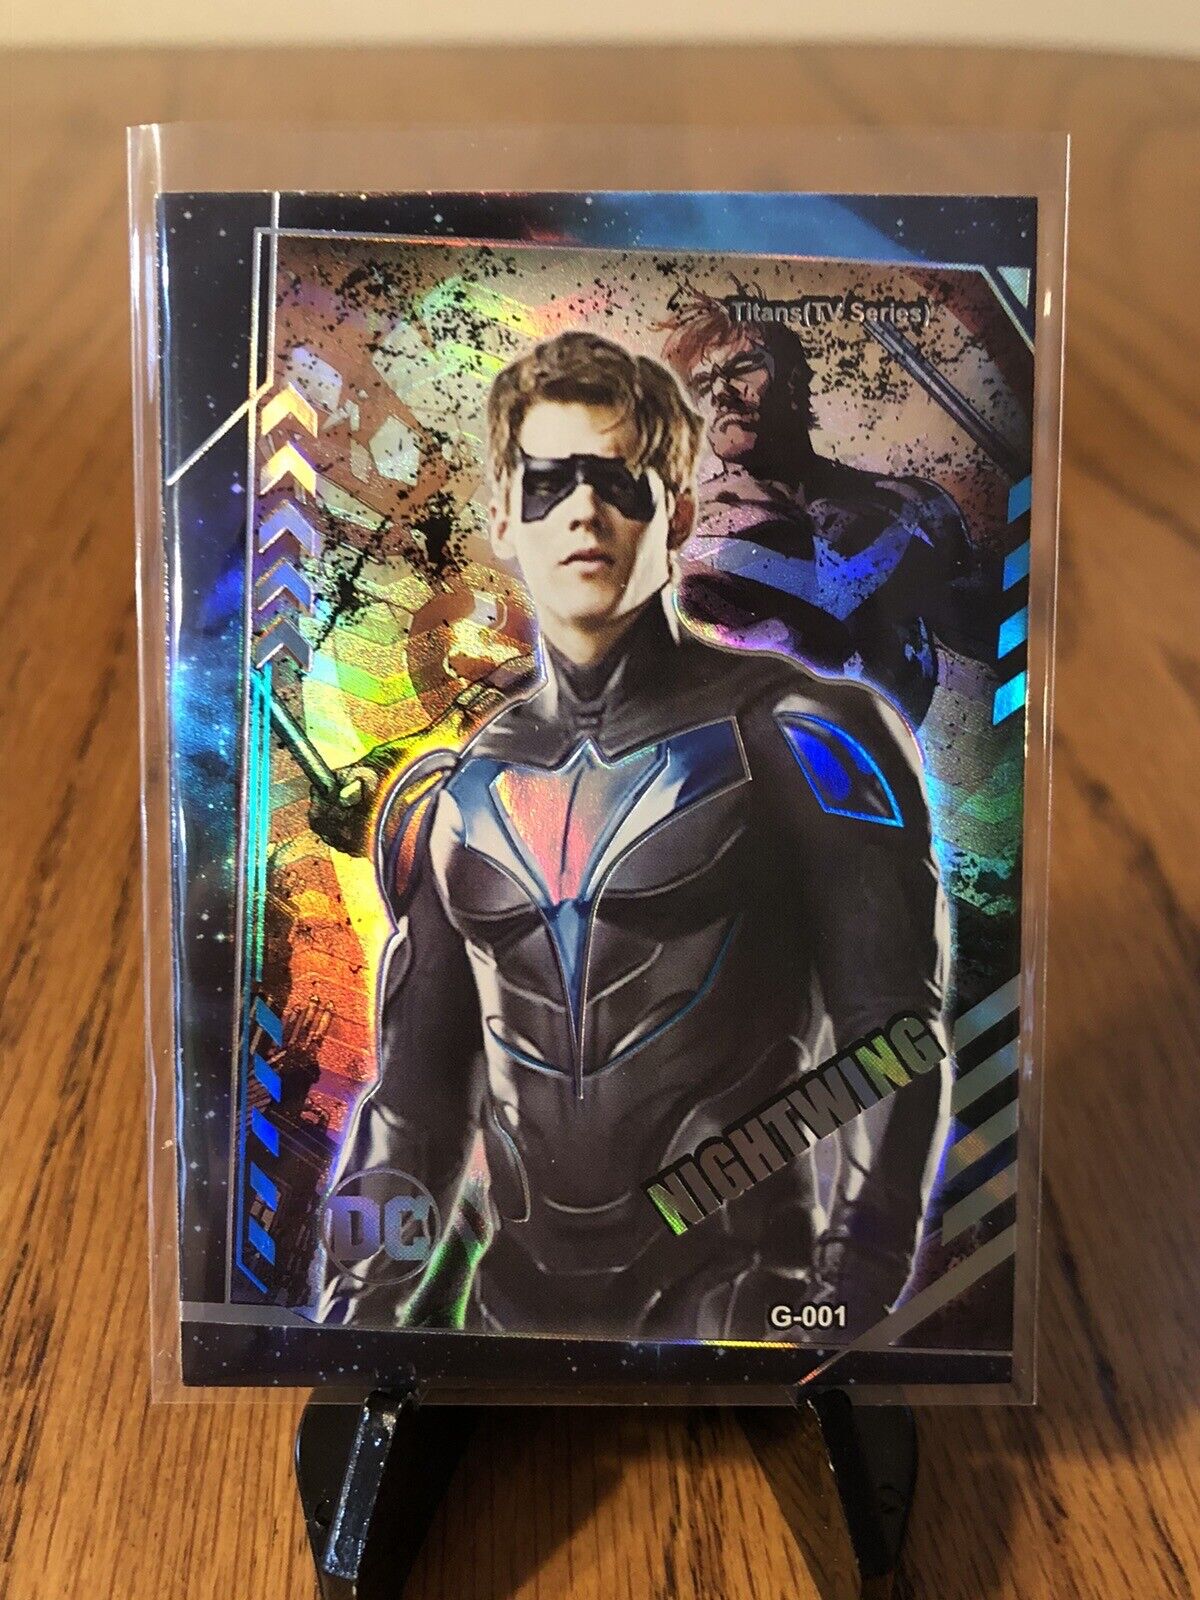 2022 DCEU Nightwing (Brenton Thwaites) G-001 Titans TV Series Card 55pt Holofoil